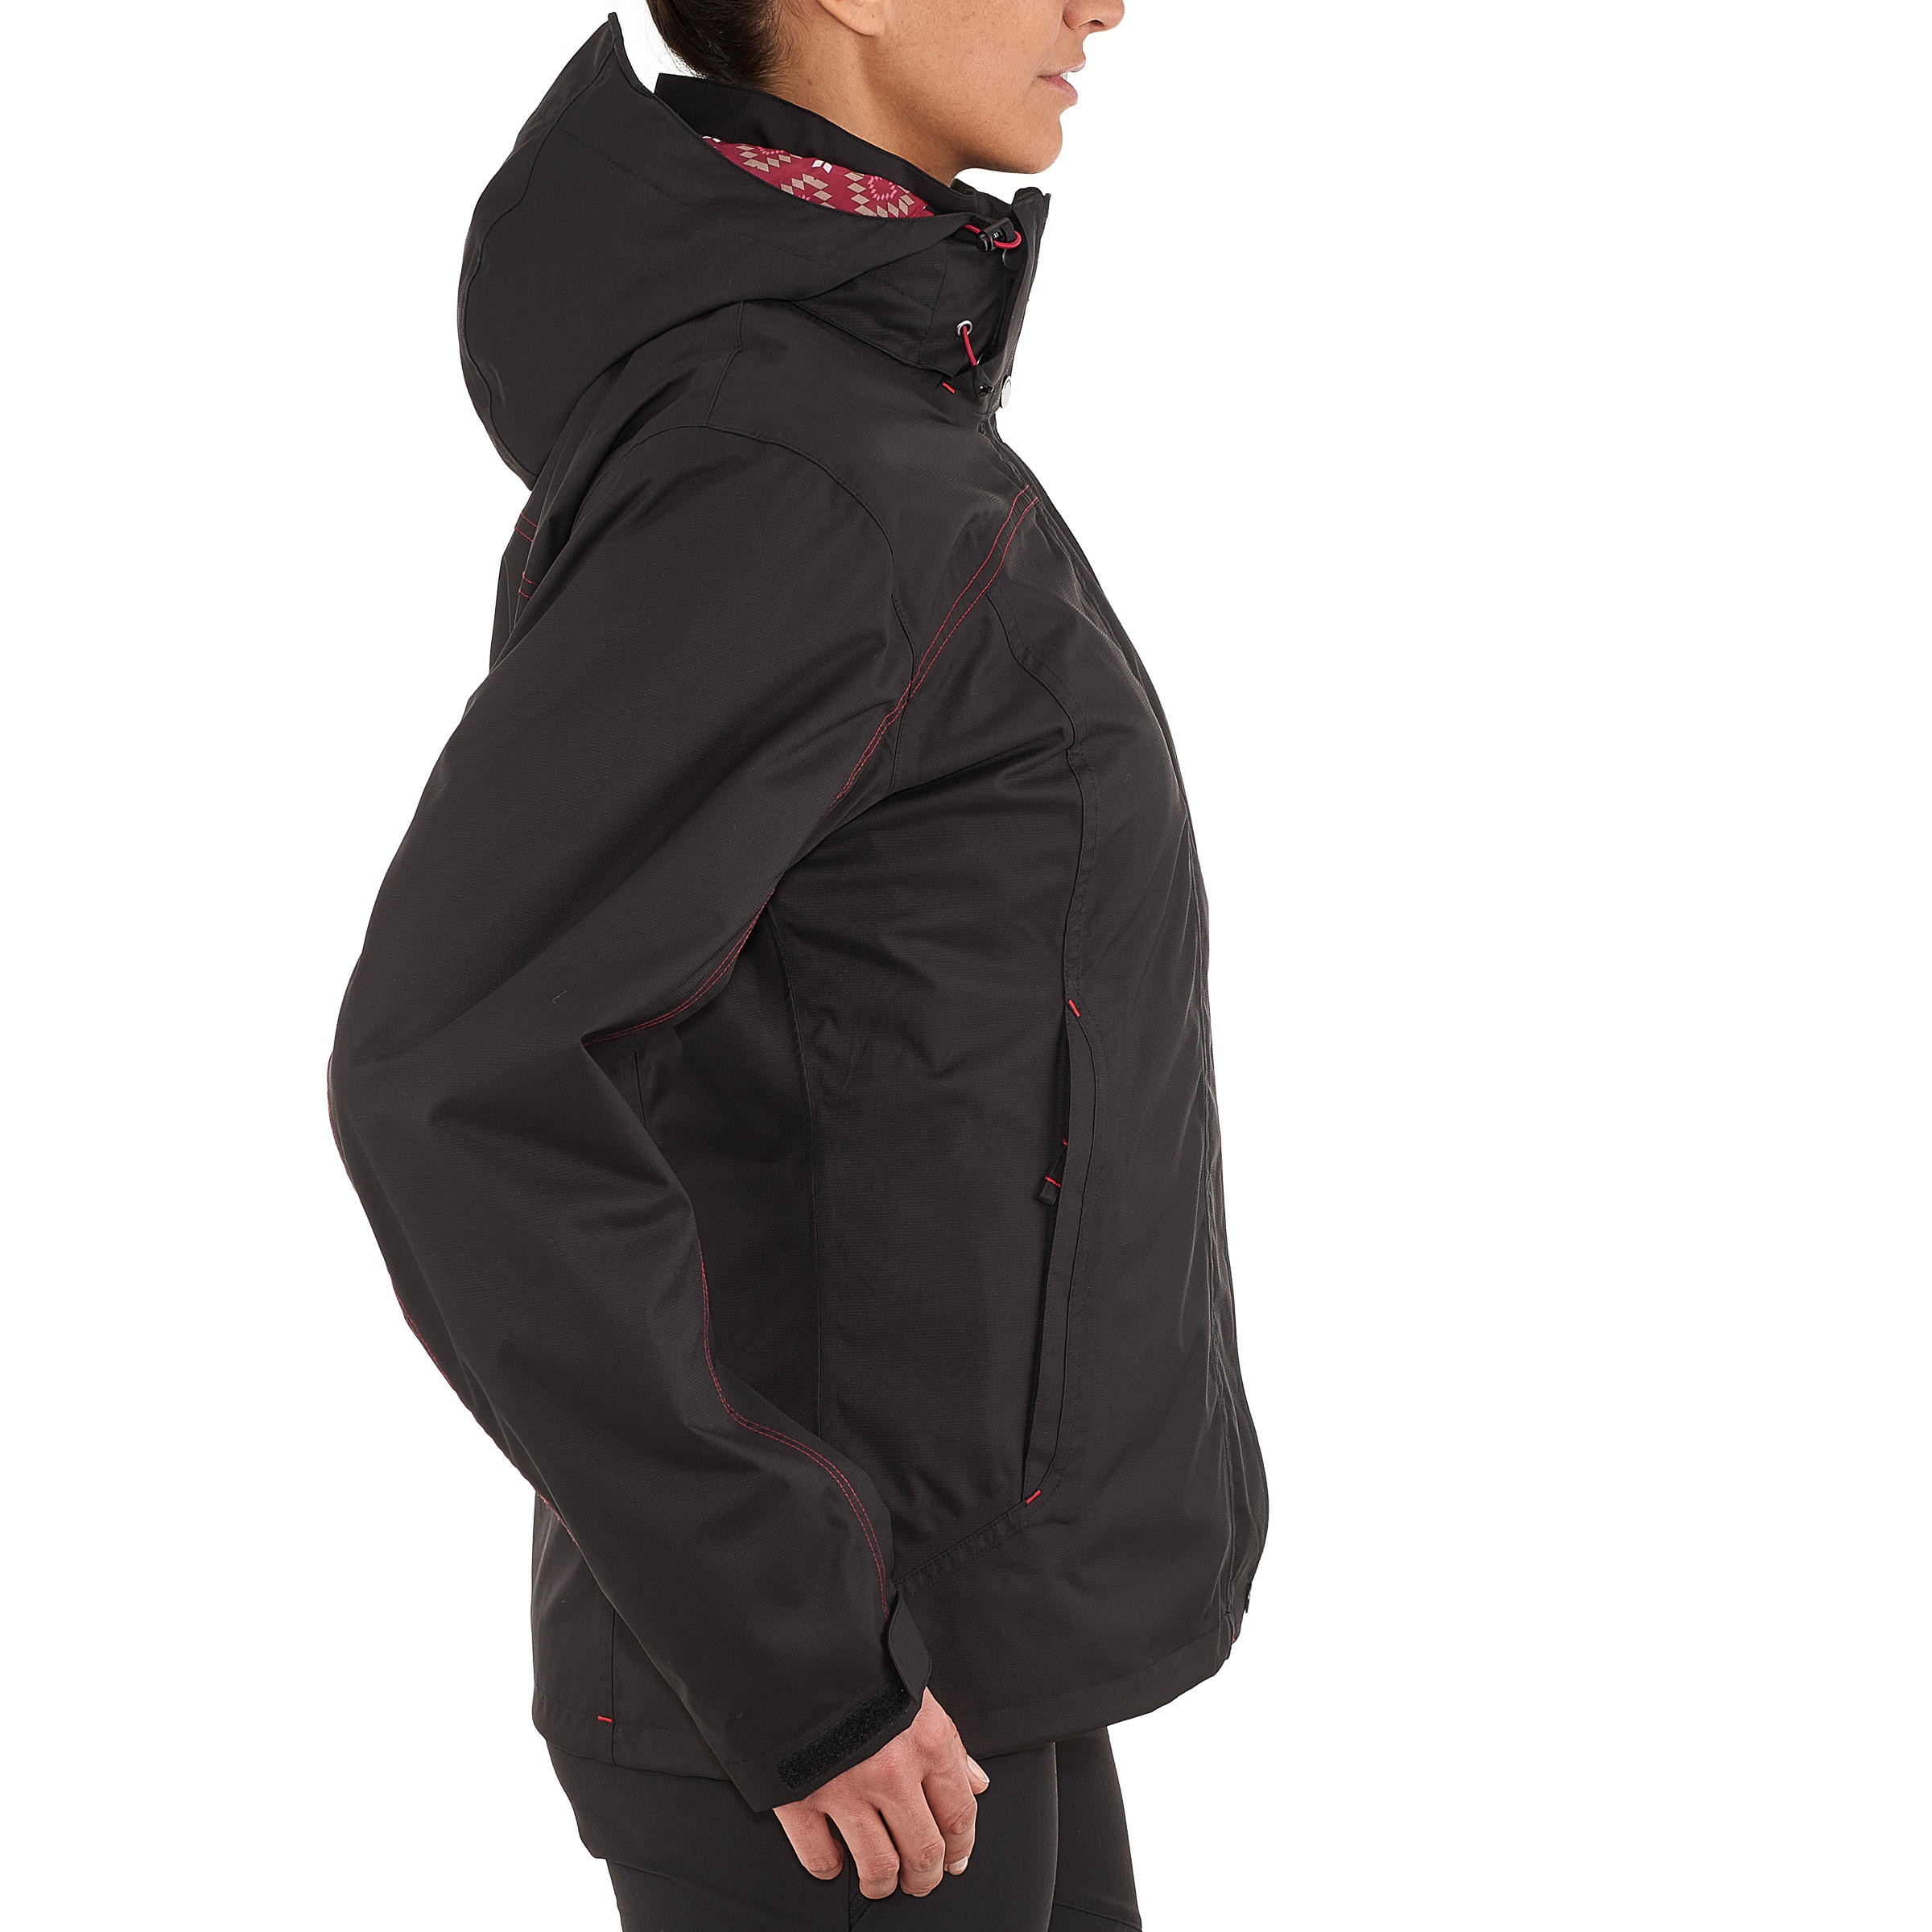 Rainwarm 100 Women's 3-in-1 Trekking Jacket - Black 5/26